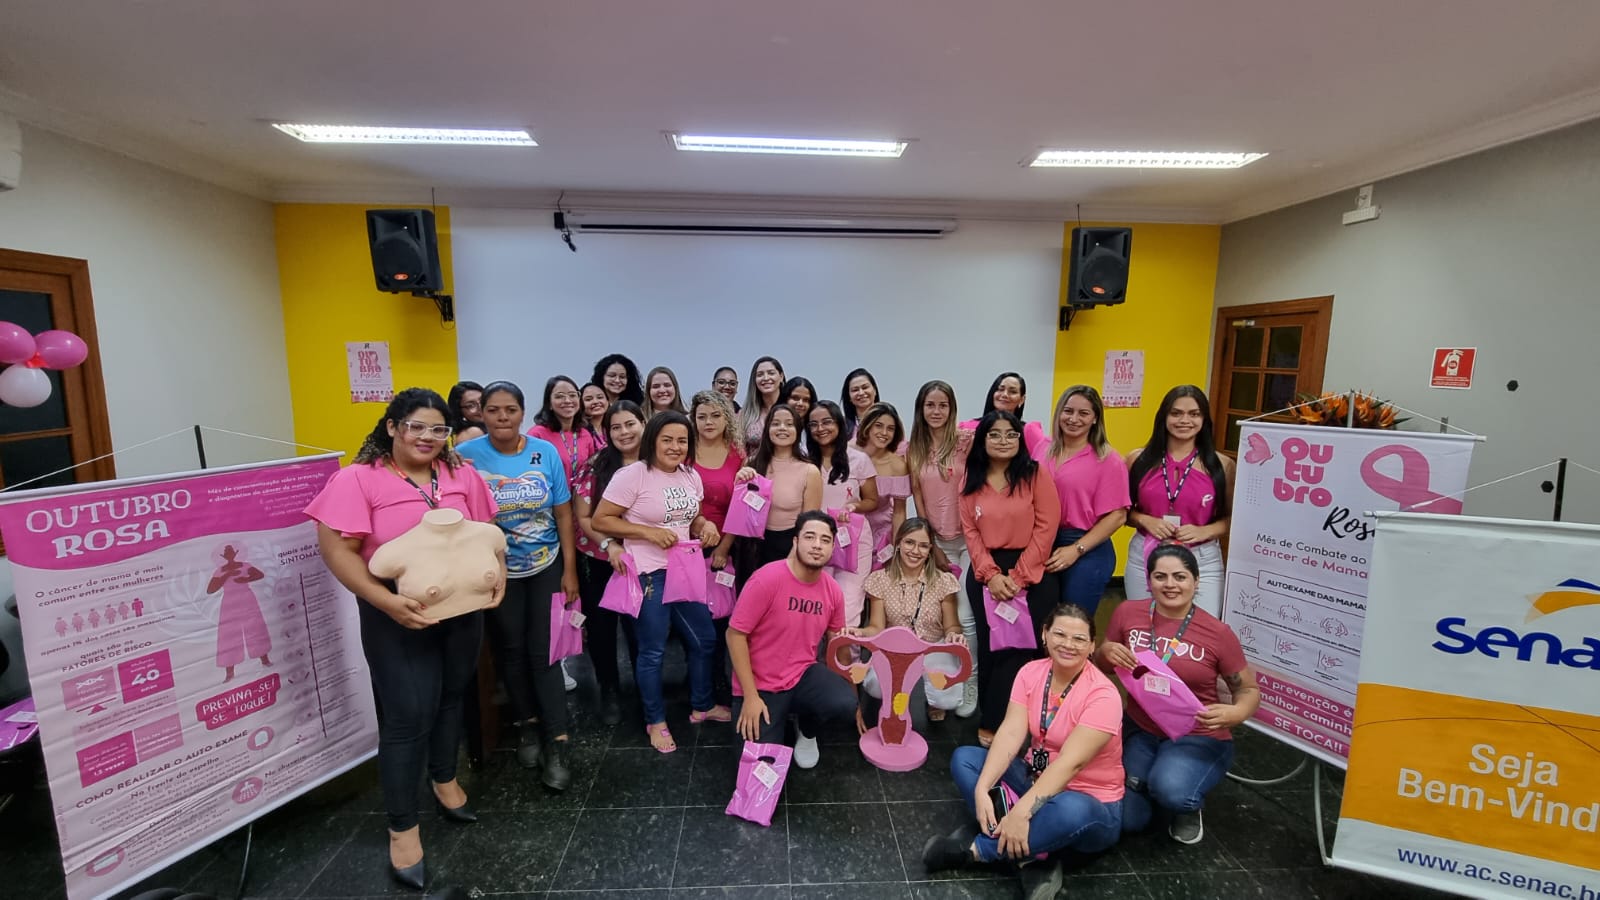 Alunos do Senac Acre promovem palestra educacional no Outubro Rosa